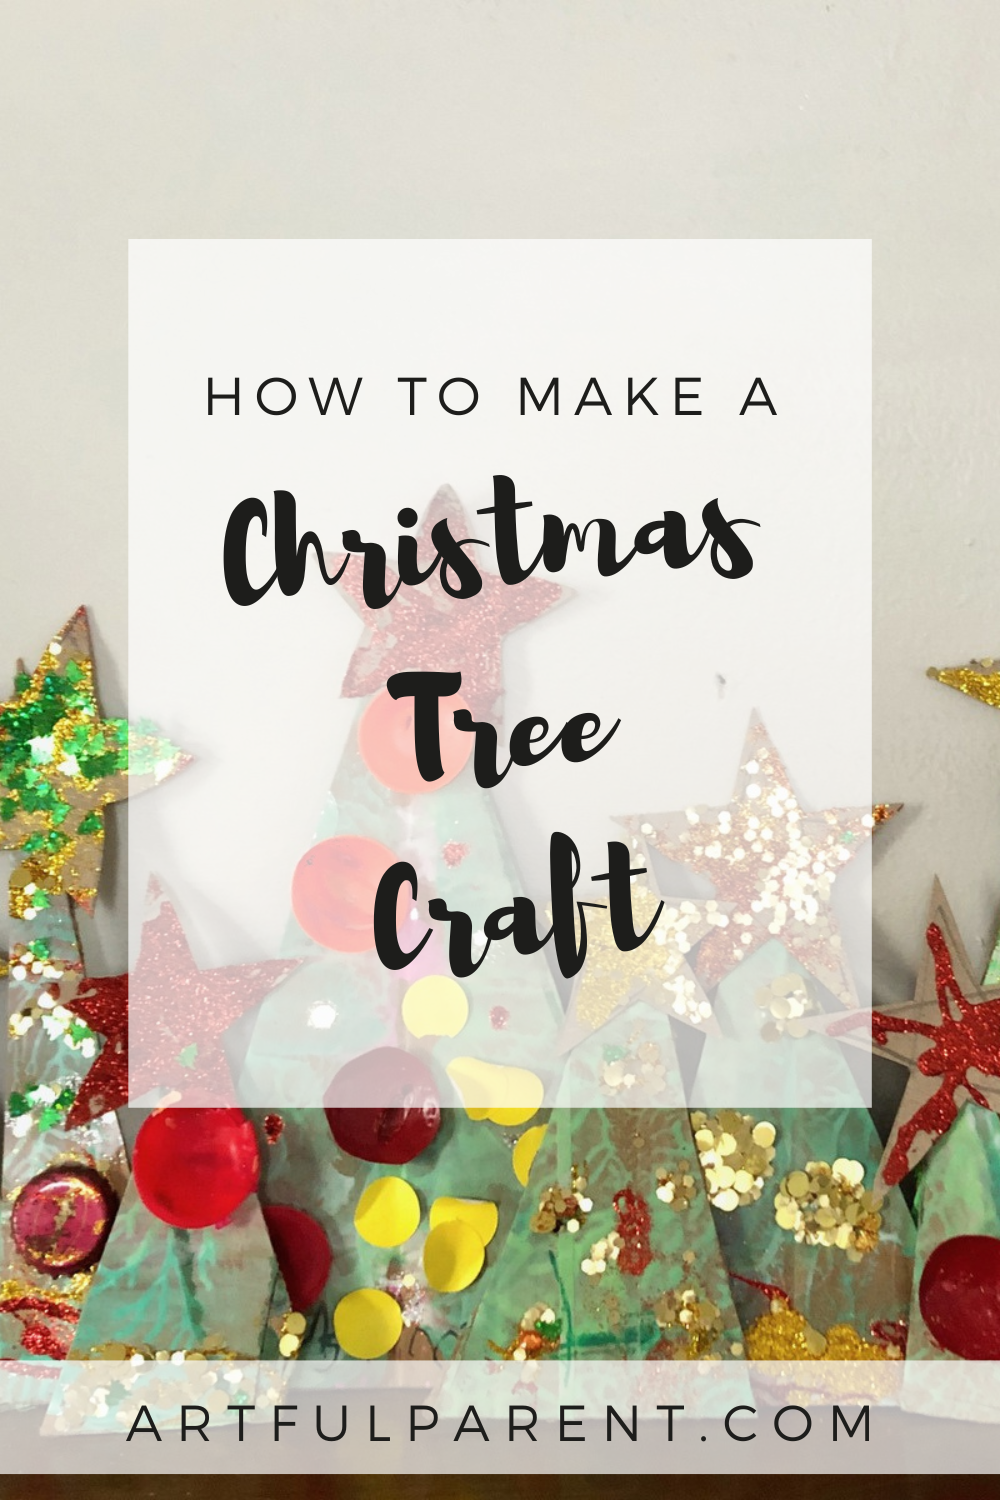 How to Make a Christmas Tree Craft